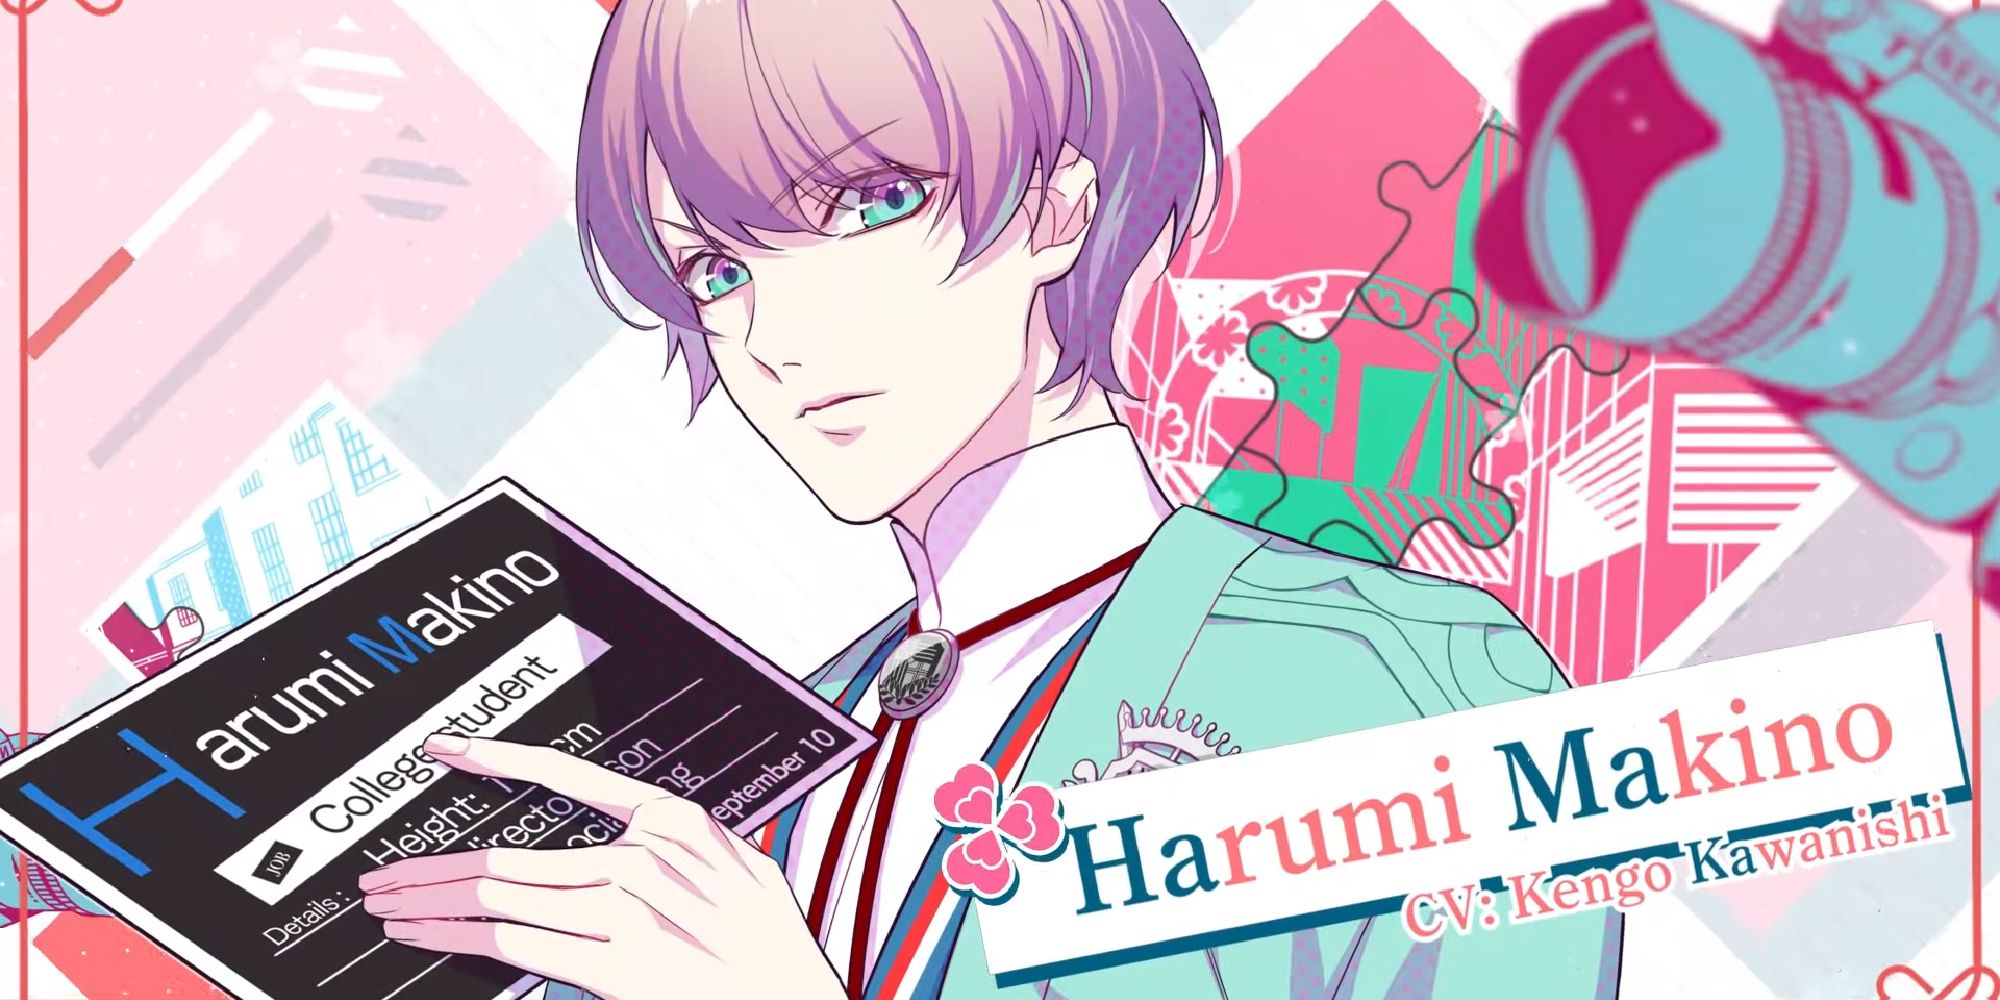 informational panel for harumi